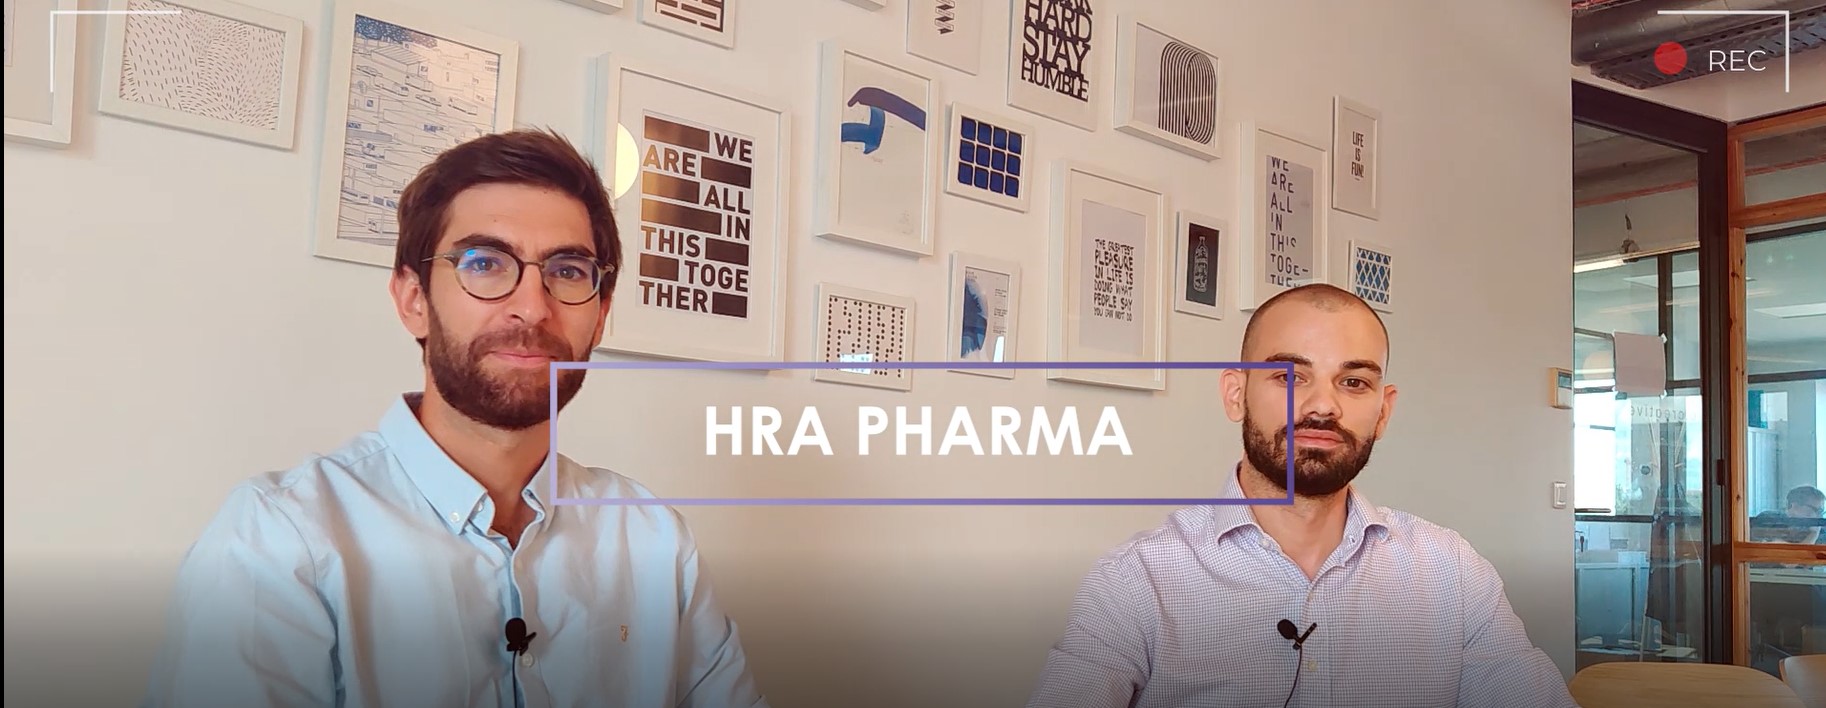 Témoignage de HRA Pharma